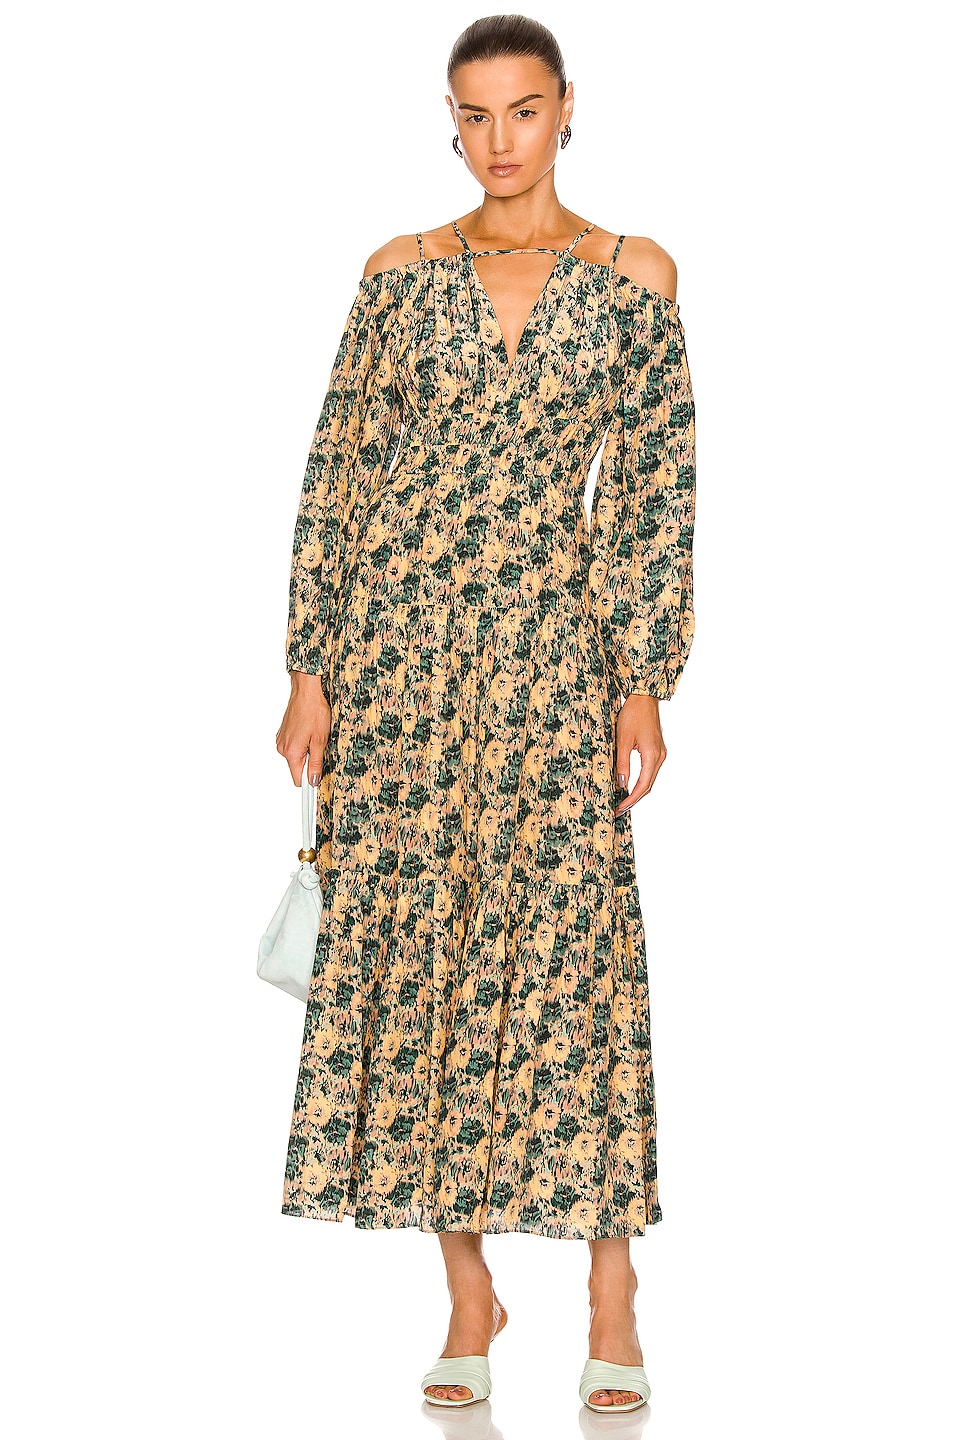 Ulla Johnson Marguerite Dress in Begonia | FWRD